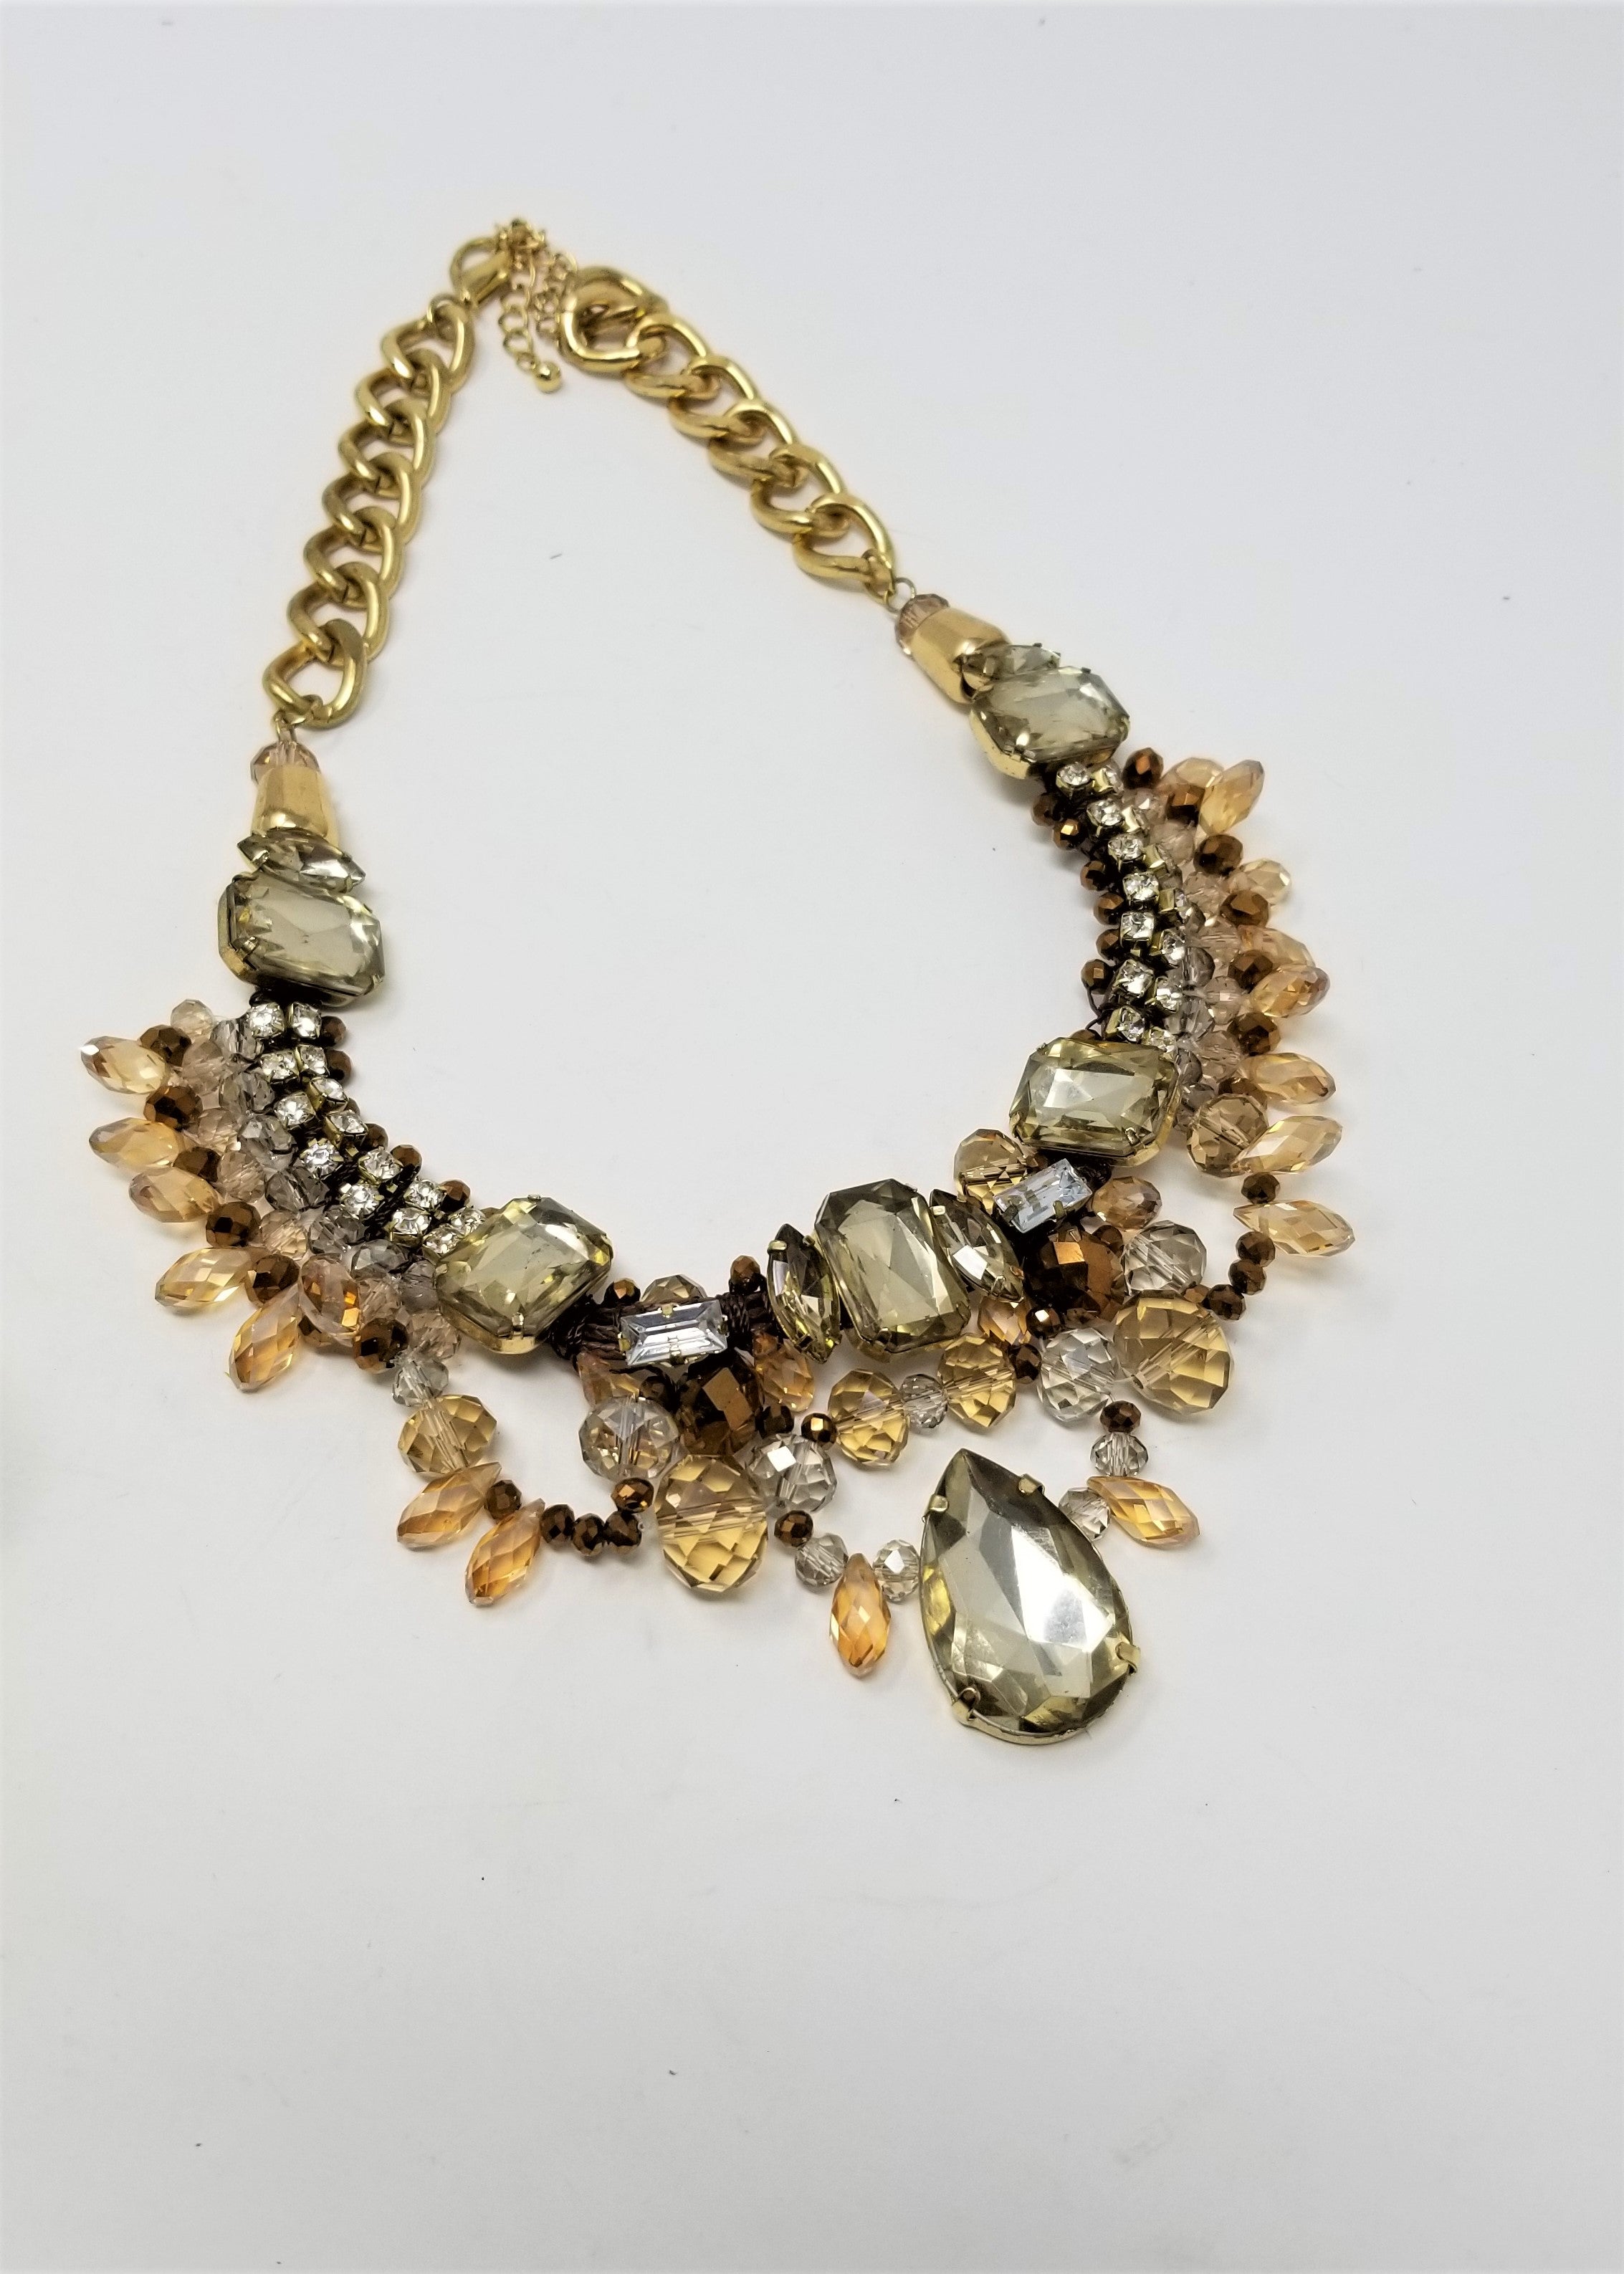 Stunning Rhinestone and Czech Glass Bead Statement Necklace